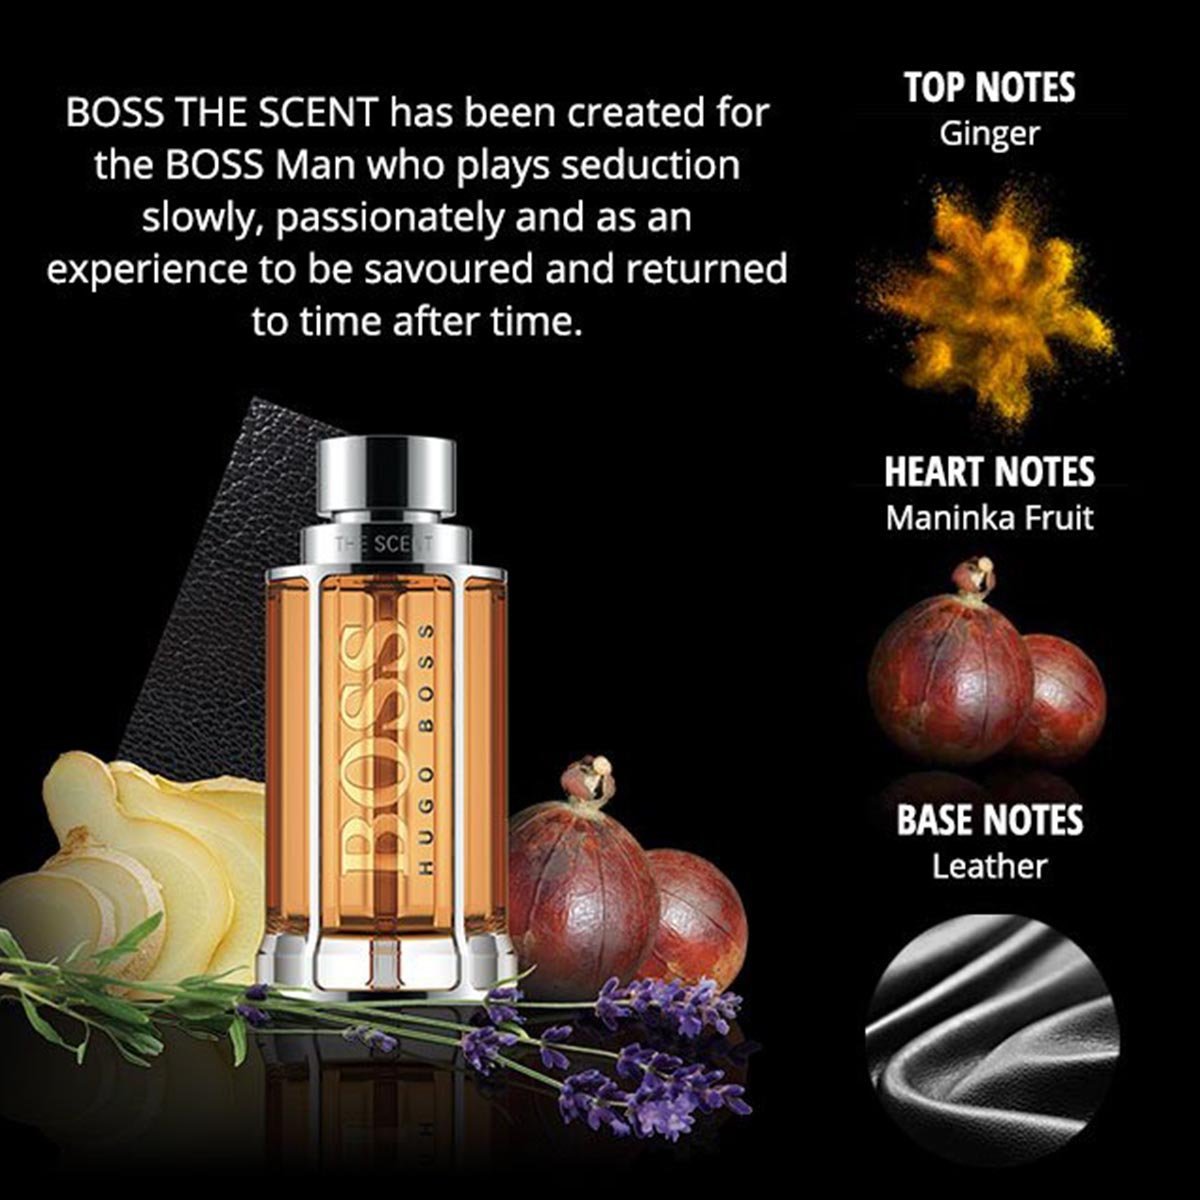 Hugo Boss The Scent Deluxe Gift Set - My Perfume Shop Australia